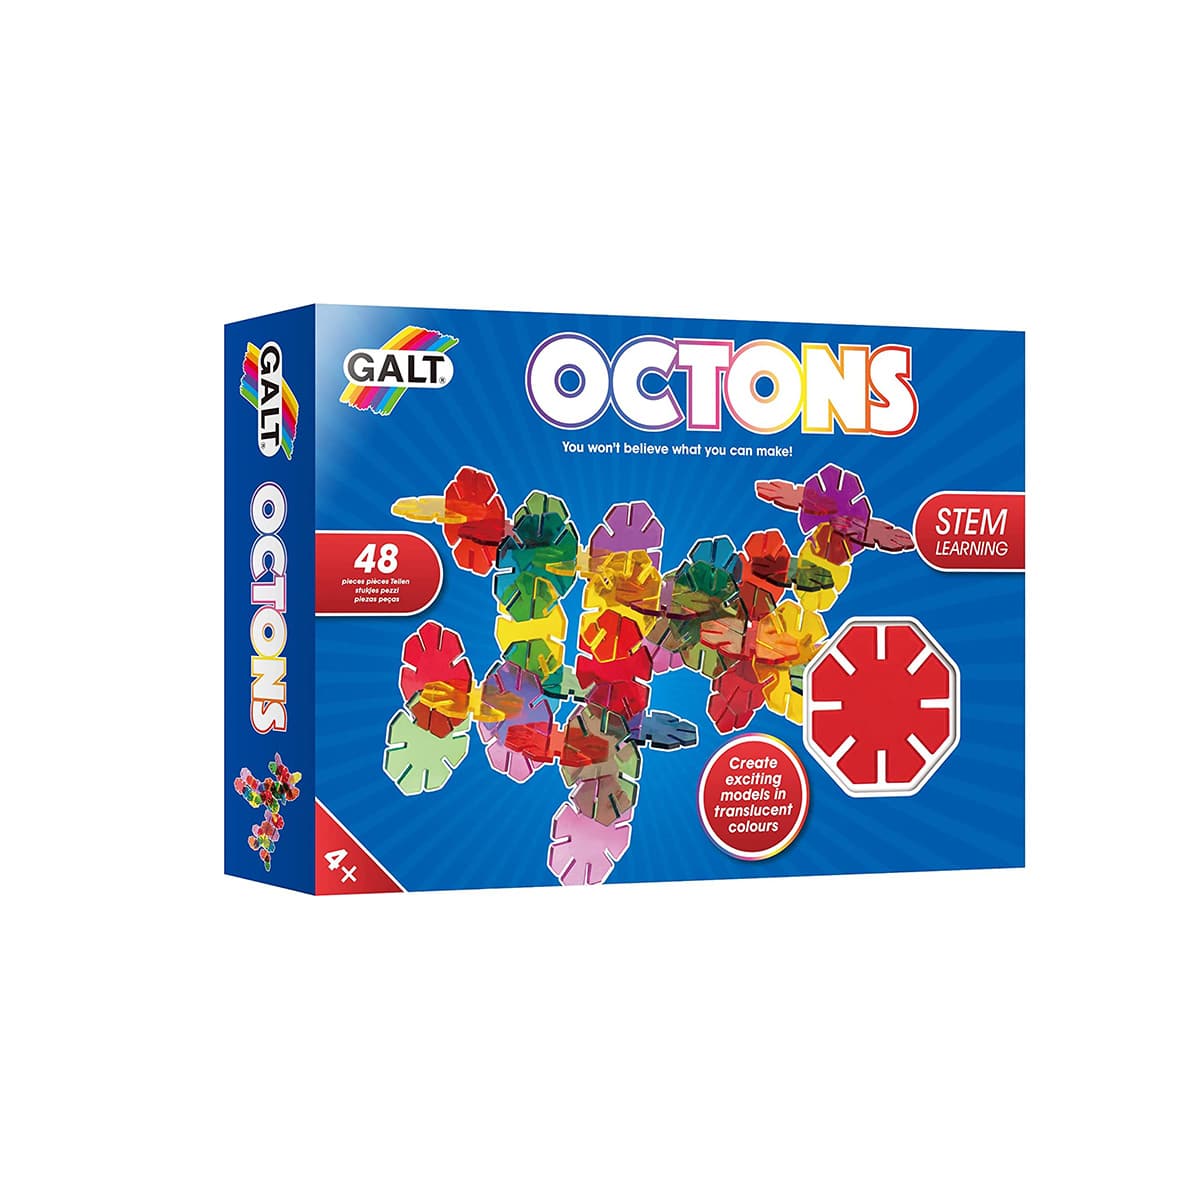 OCTONS（オクトンズ）: ボーネルンド オンラインショップ。世界中の 